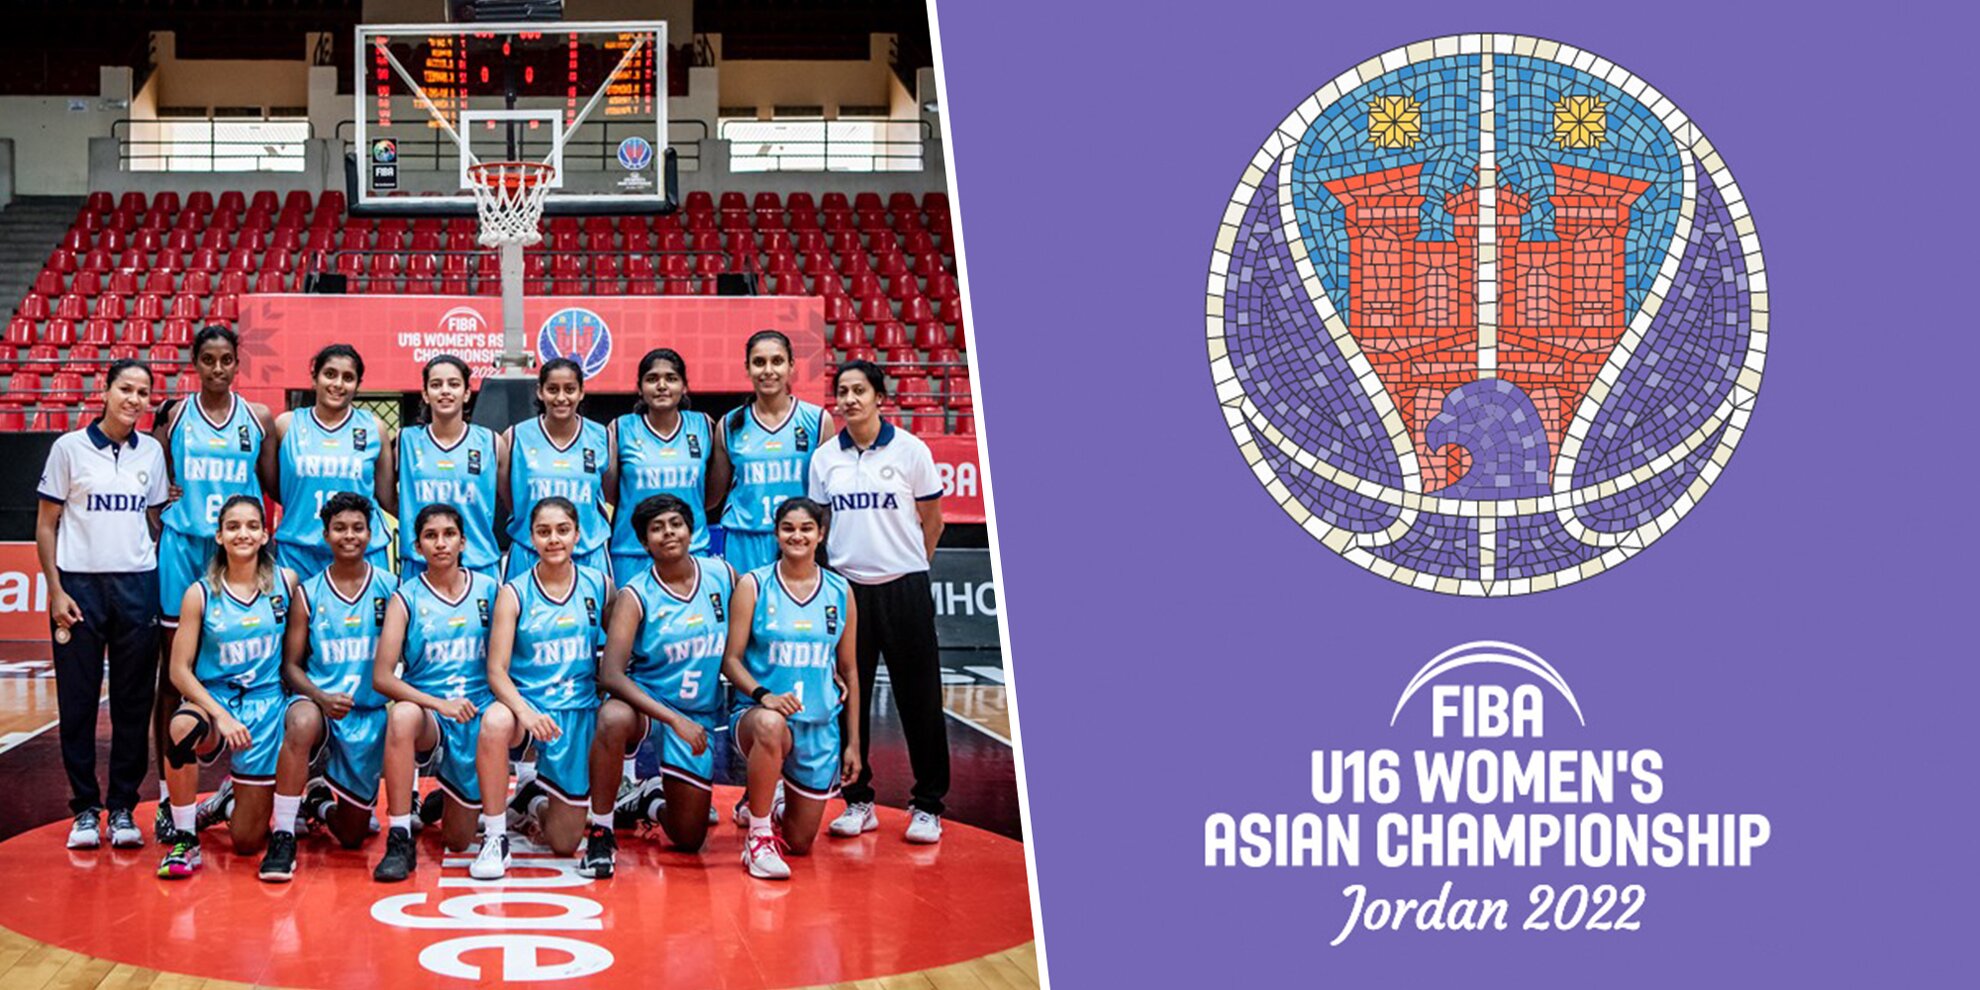 FIBA U16 Women's Asian Championship